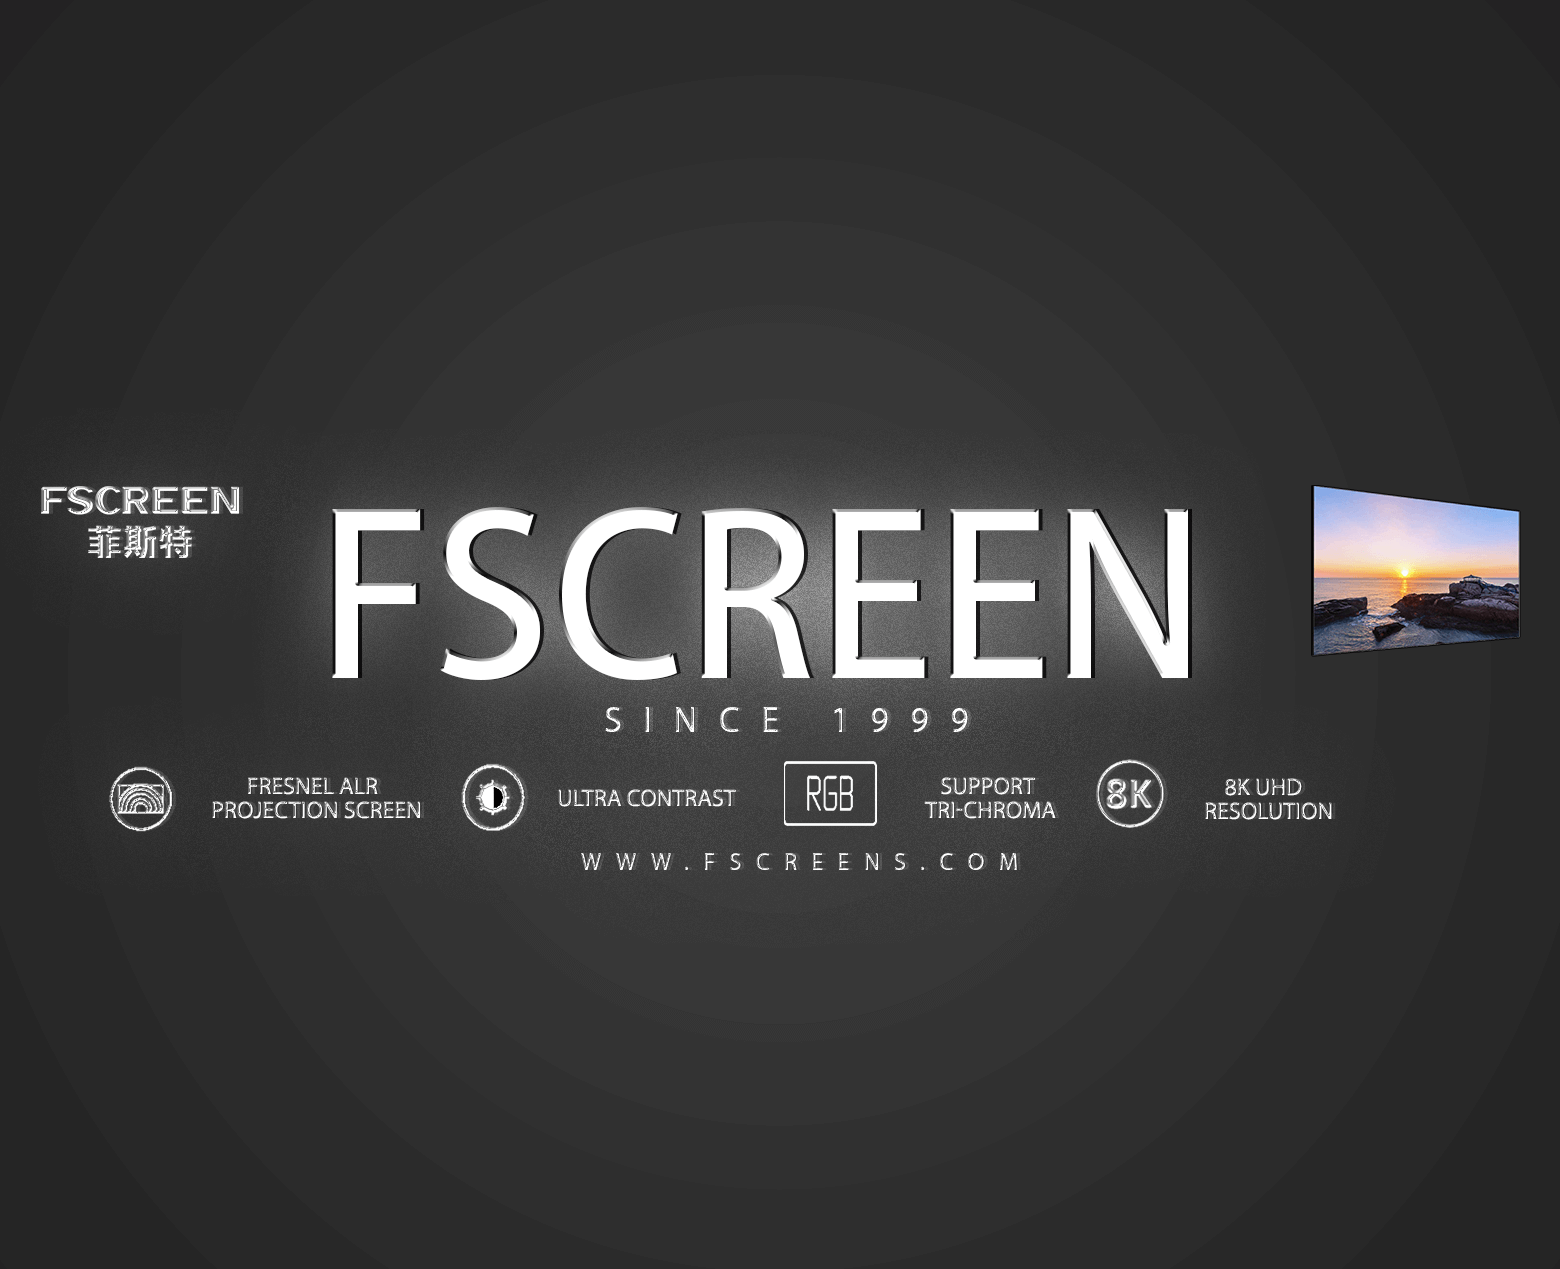 Fscreen-24 Years of Fresnel Optical Screen Revolution